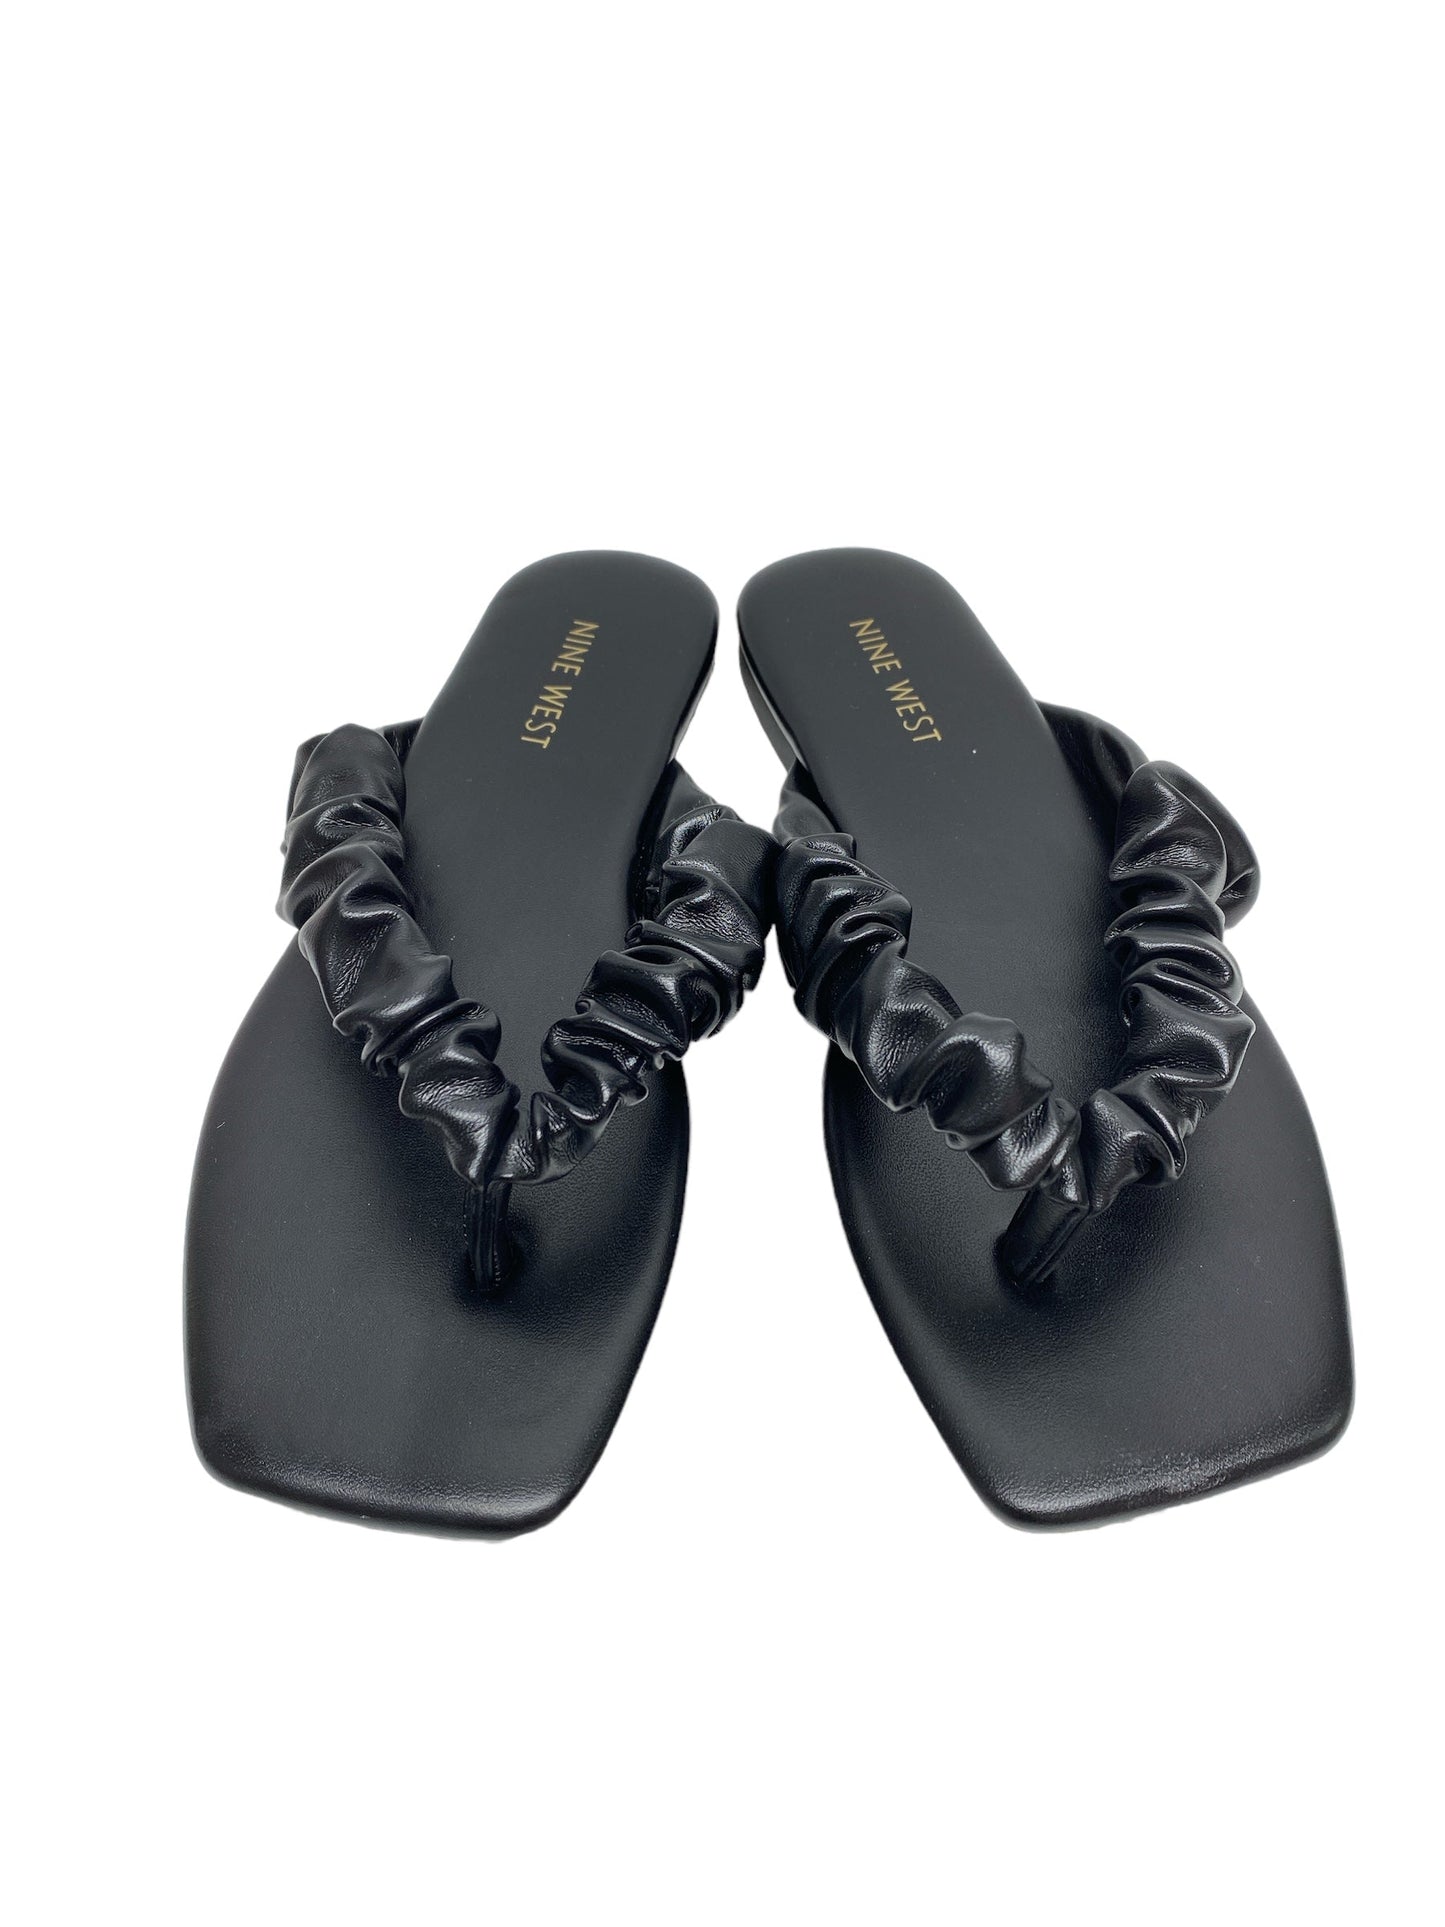 Sandals Flip Flops By Nine West  Size: 6.5